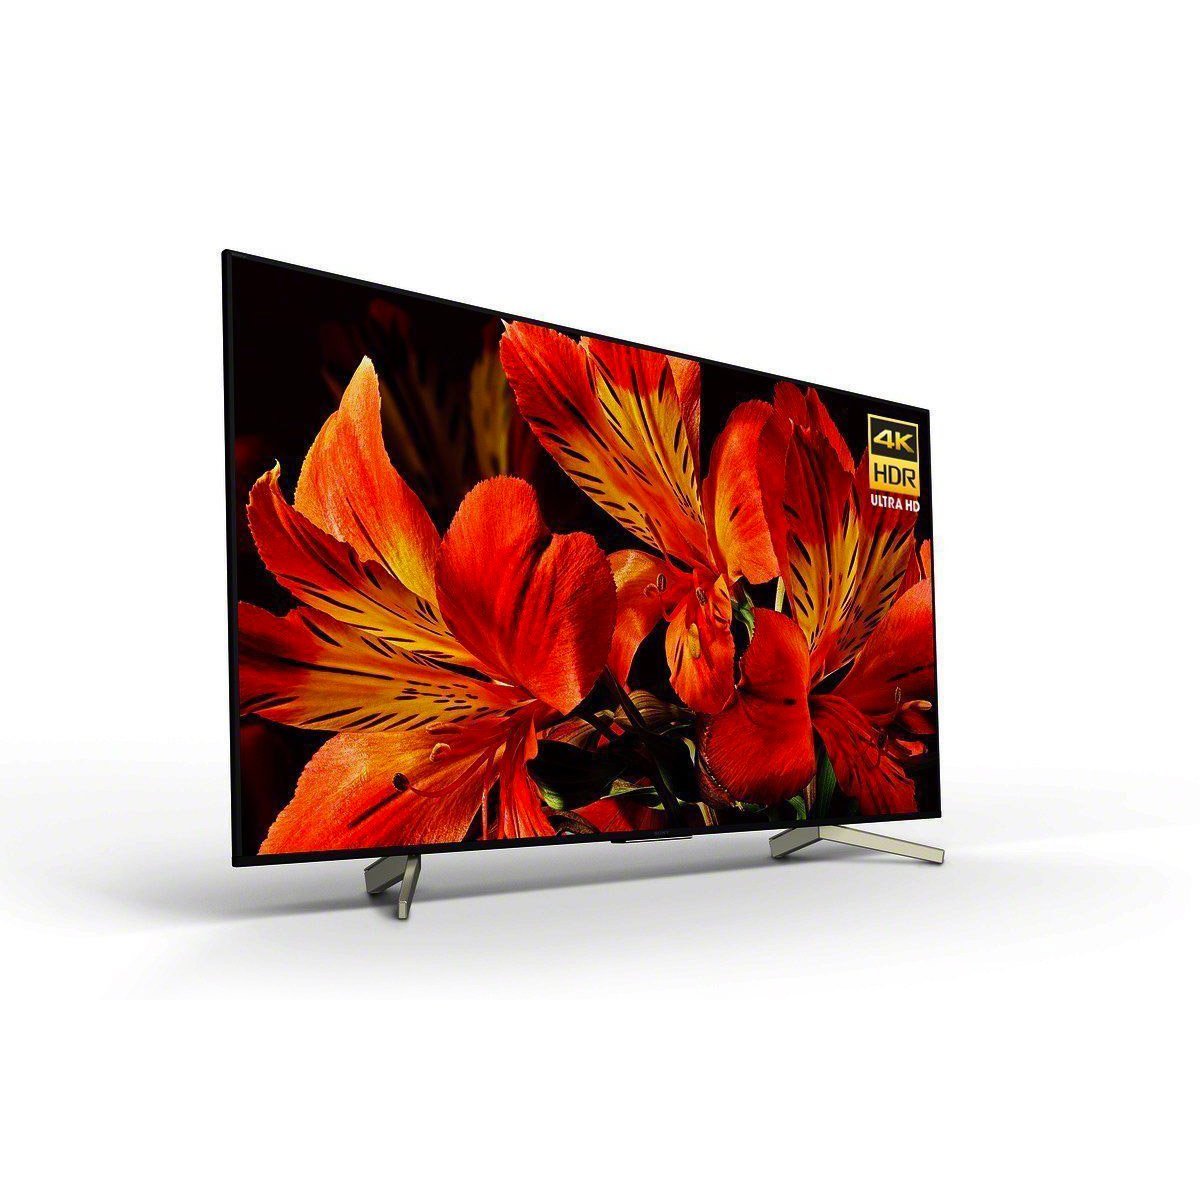 Sony XBR-75X850F 75-Inch 4K Ultra HD Smart LED TV